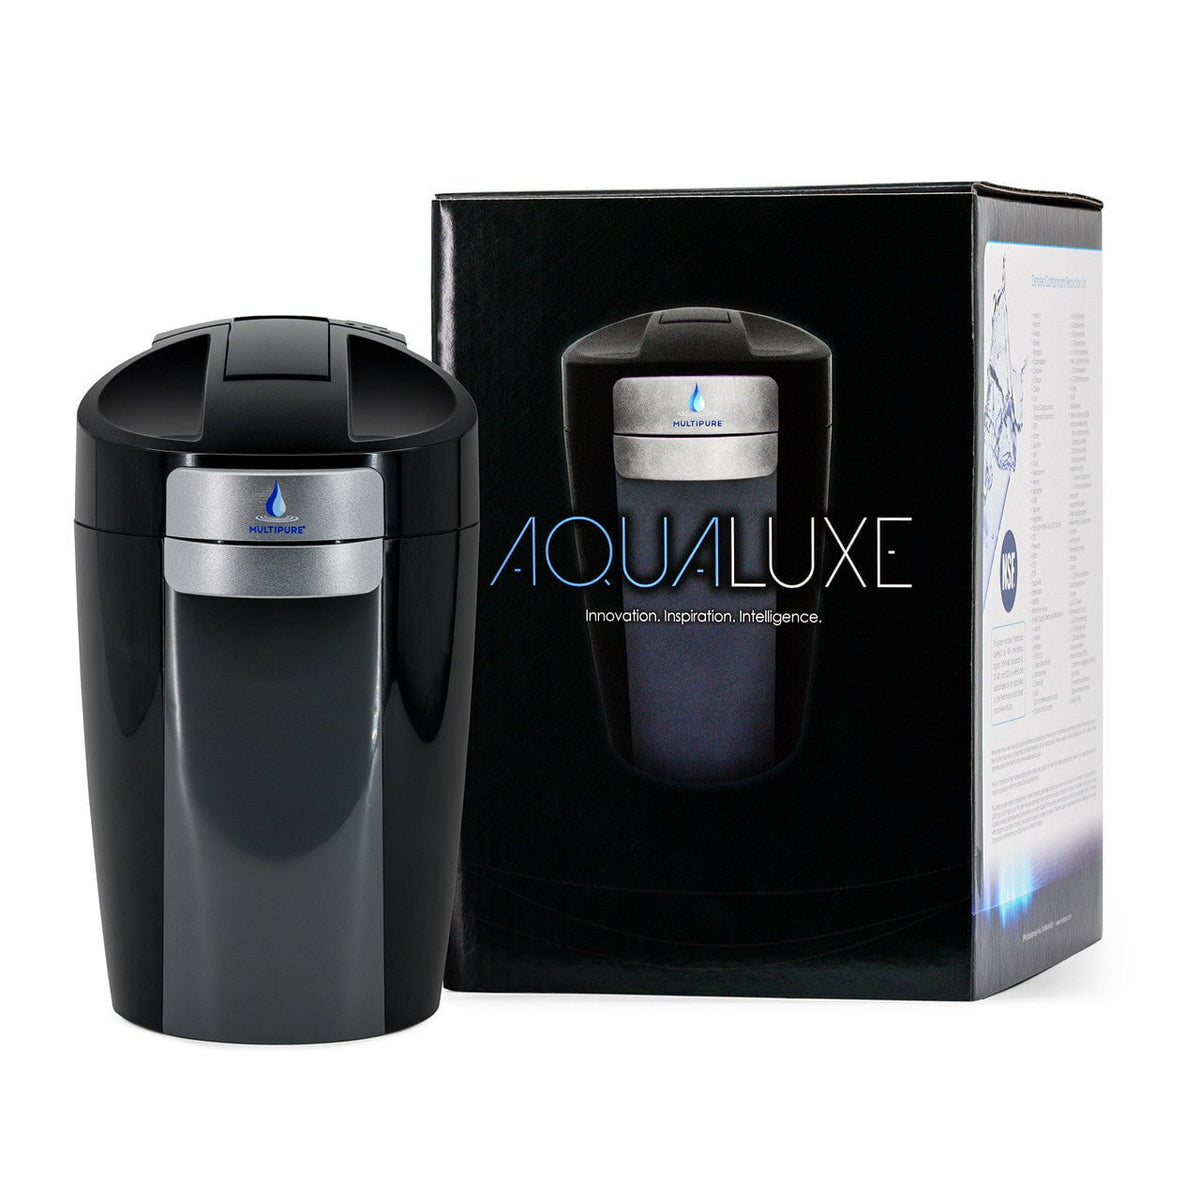 Multipure Aqualuxe Countertop Water Filter